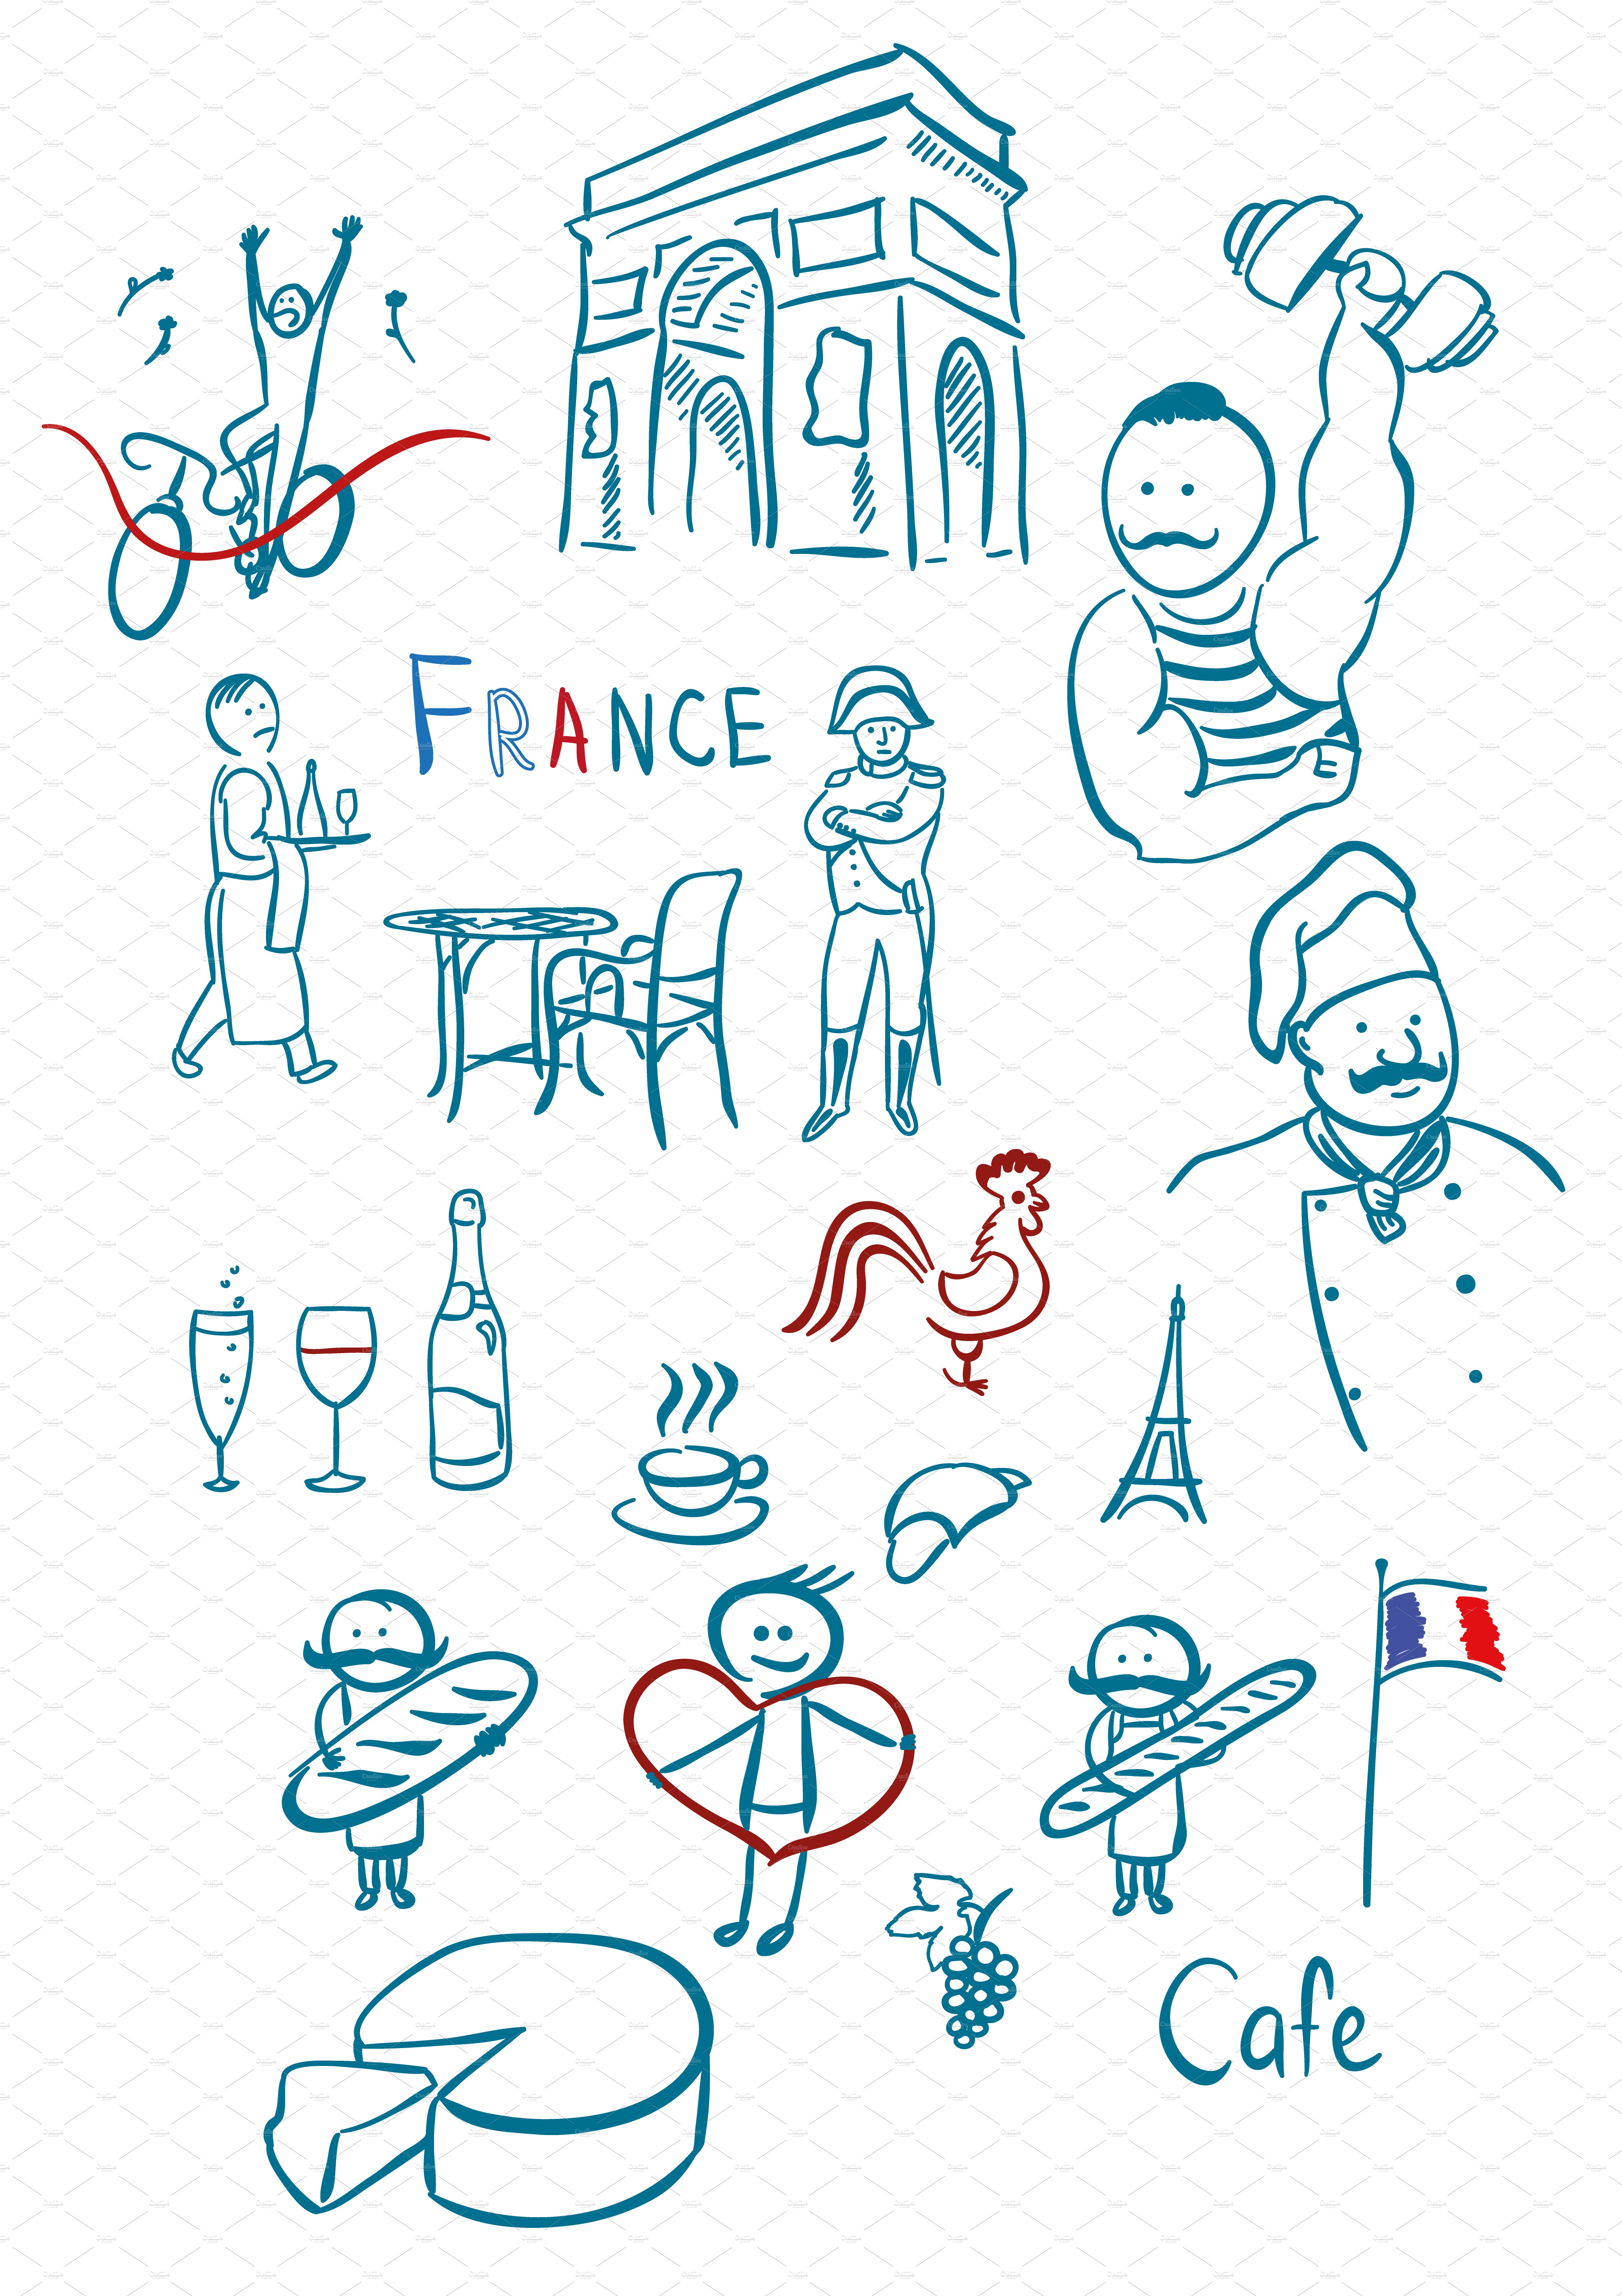 France symbols cover image.